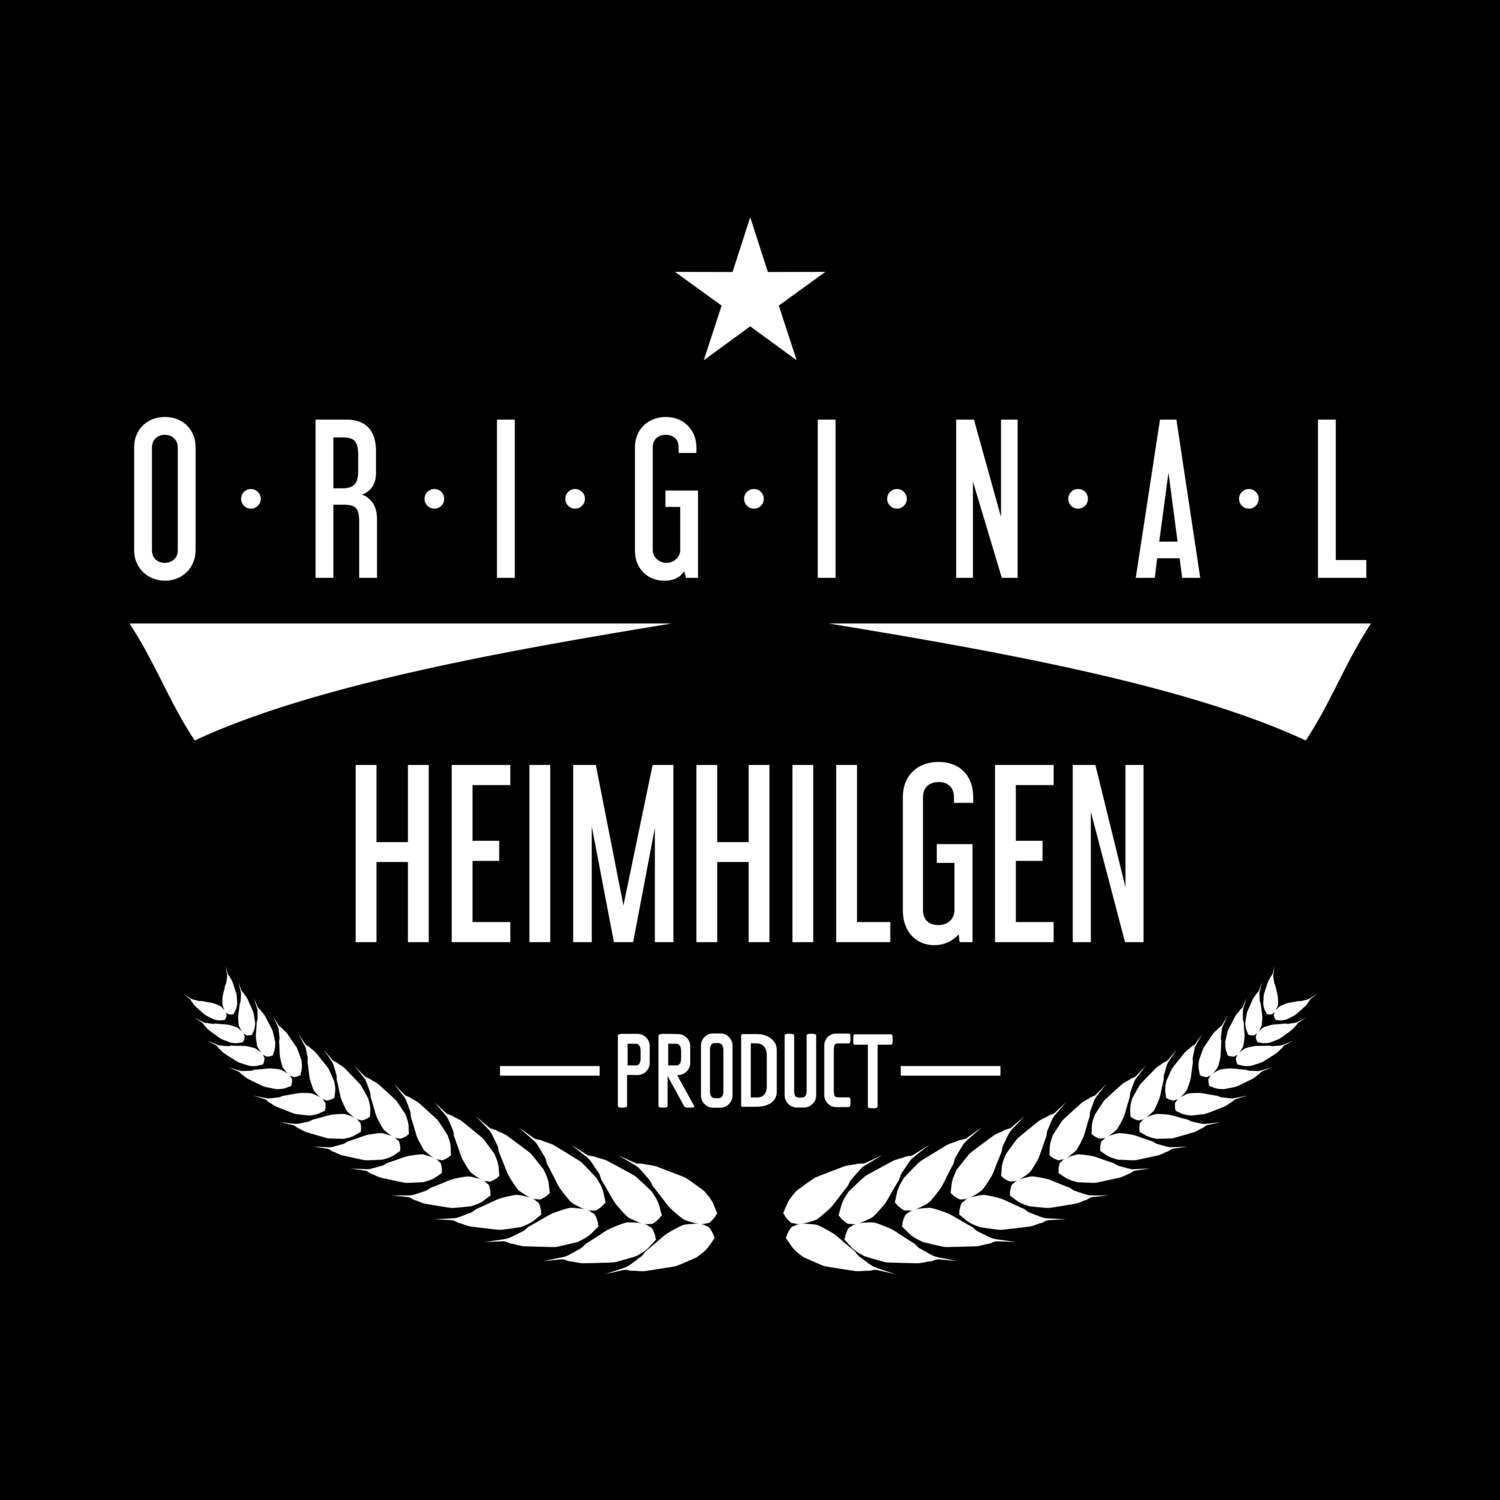 Heimhilgen T-Shirt »Original Product«